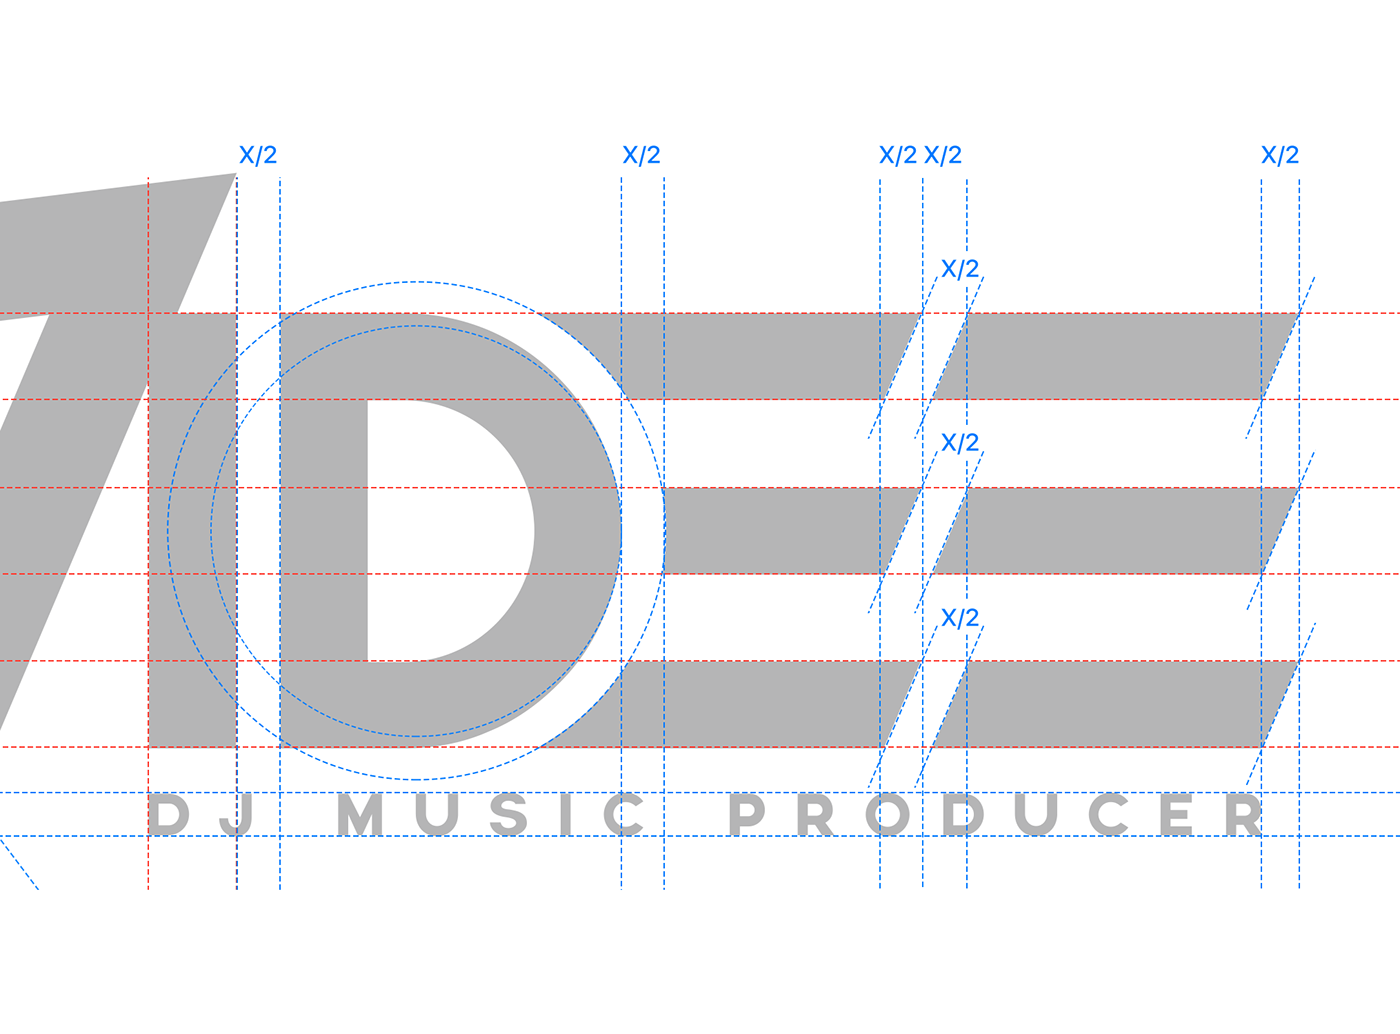 davidee deejay logo design dj